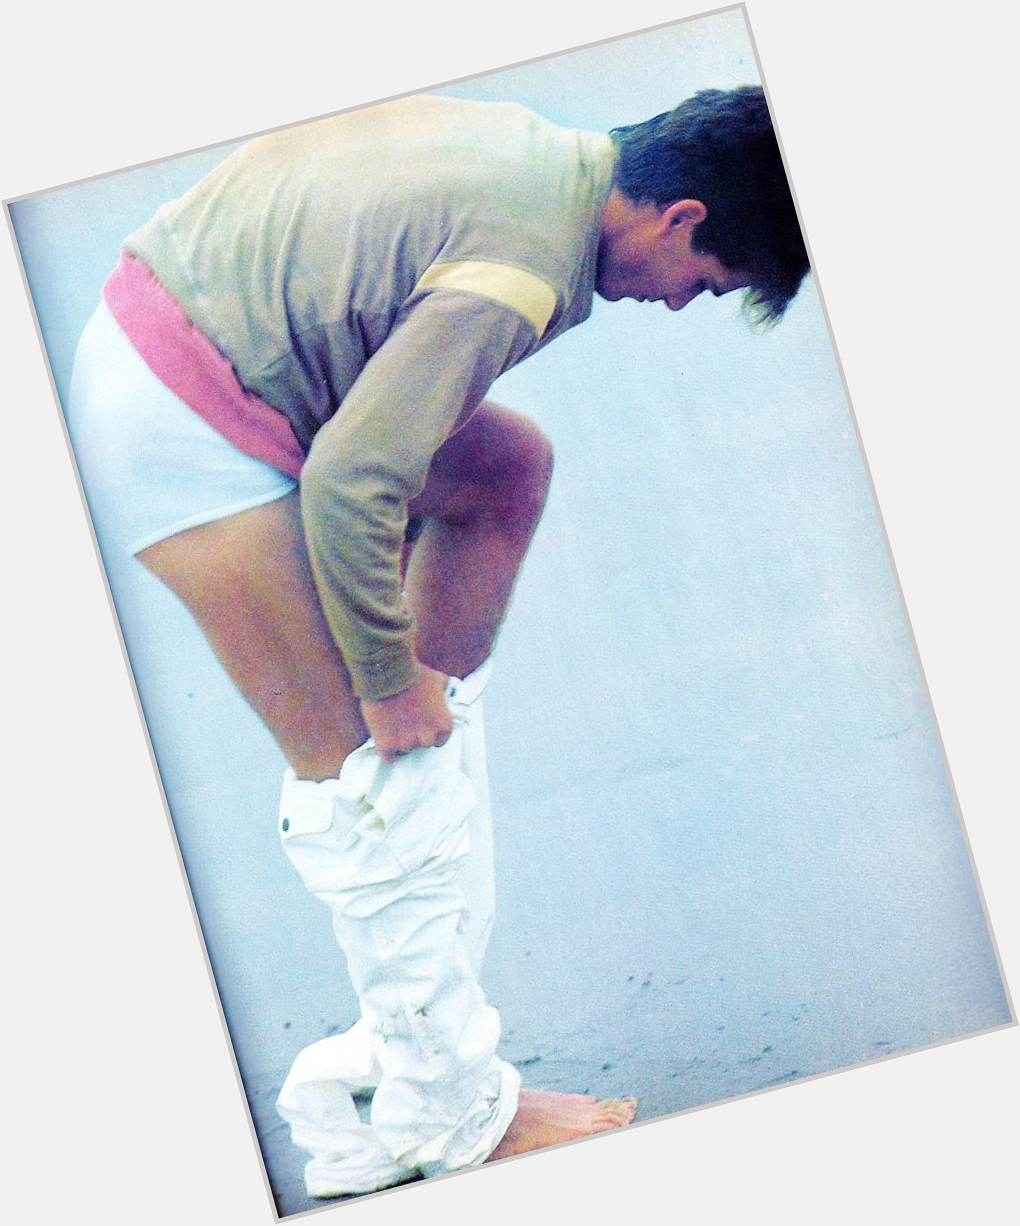 Michael "Jake Ryan" Schoeffling modeling his underwear in 1981; see more at the blog  